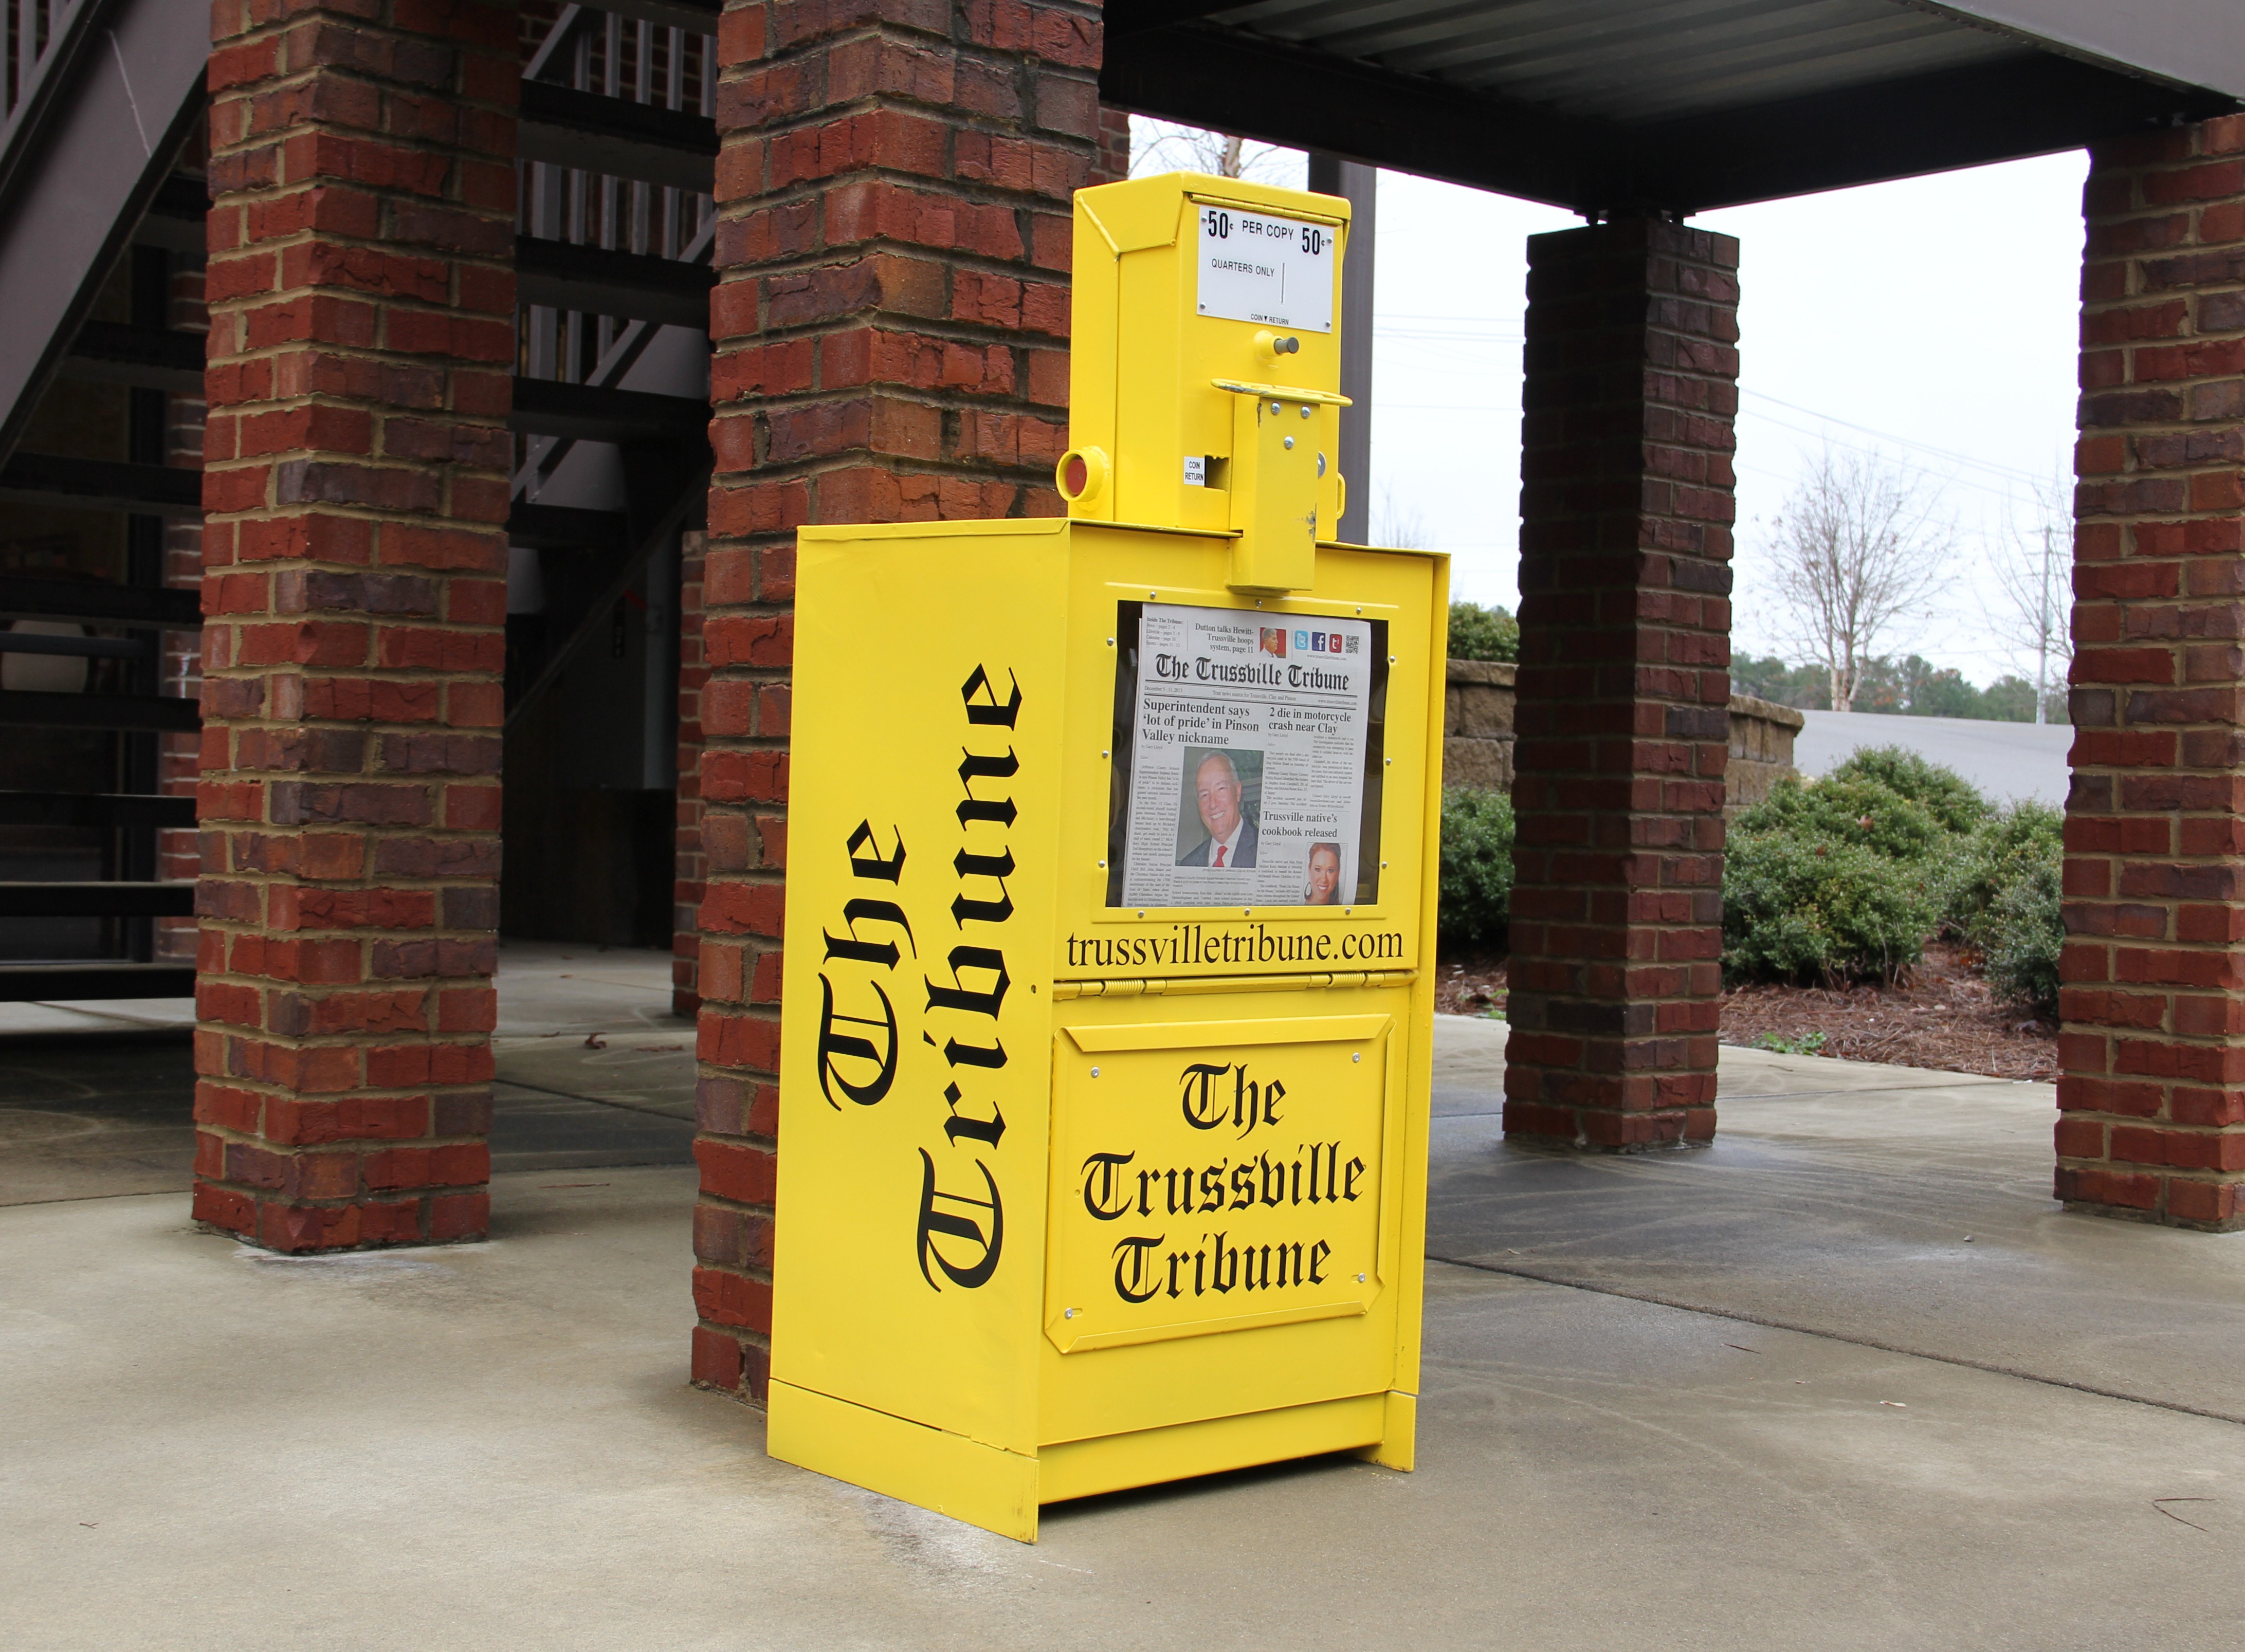 Tribune begins charging for newspaper print edition